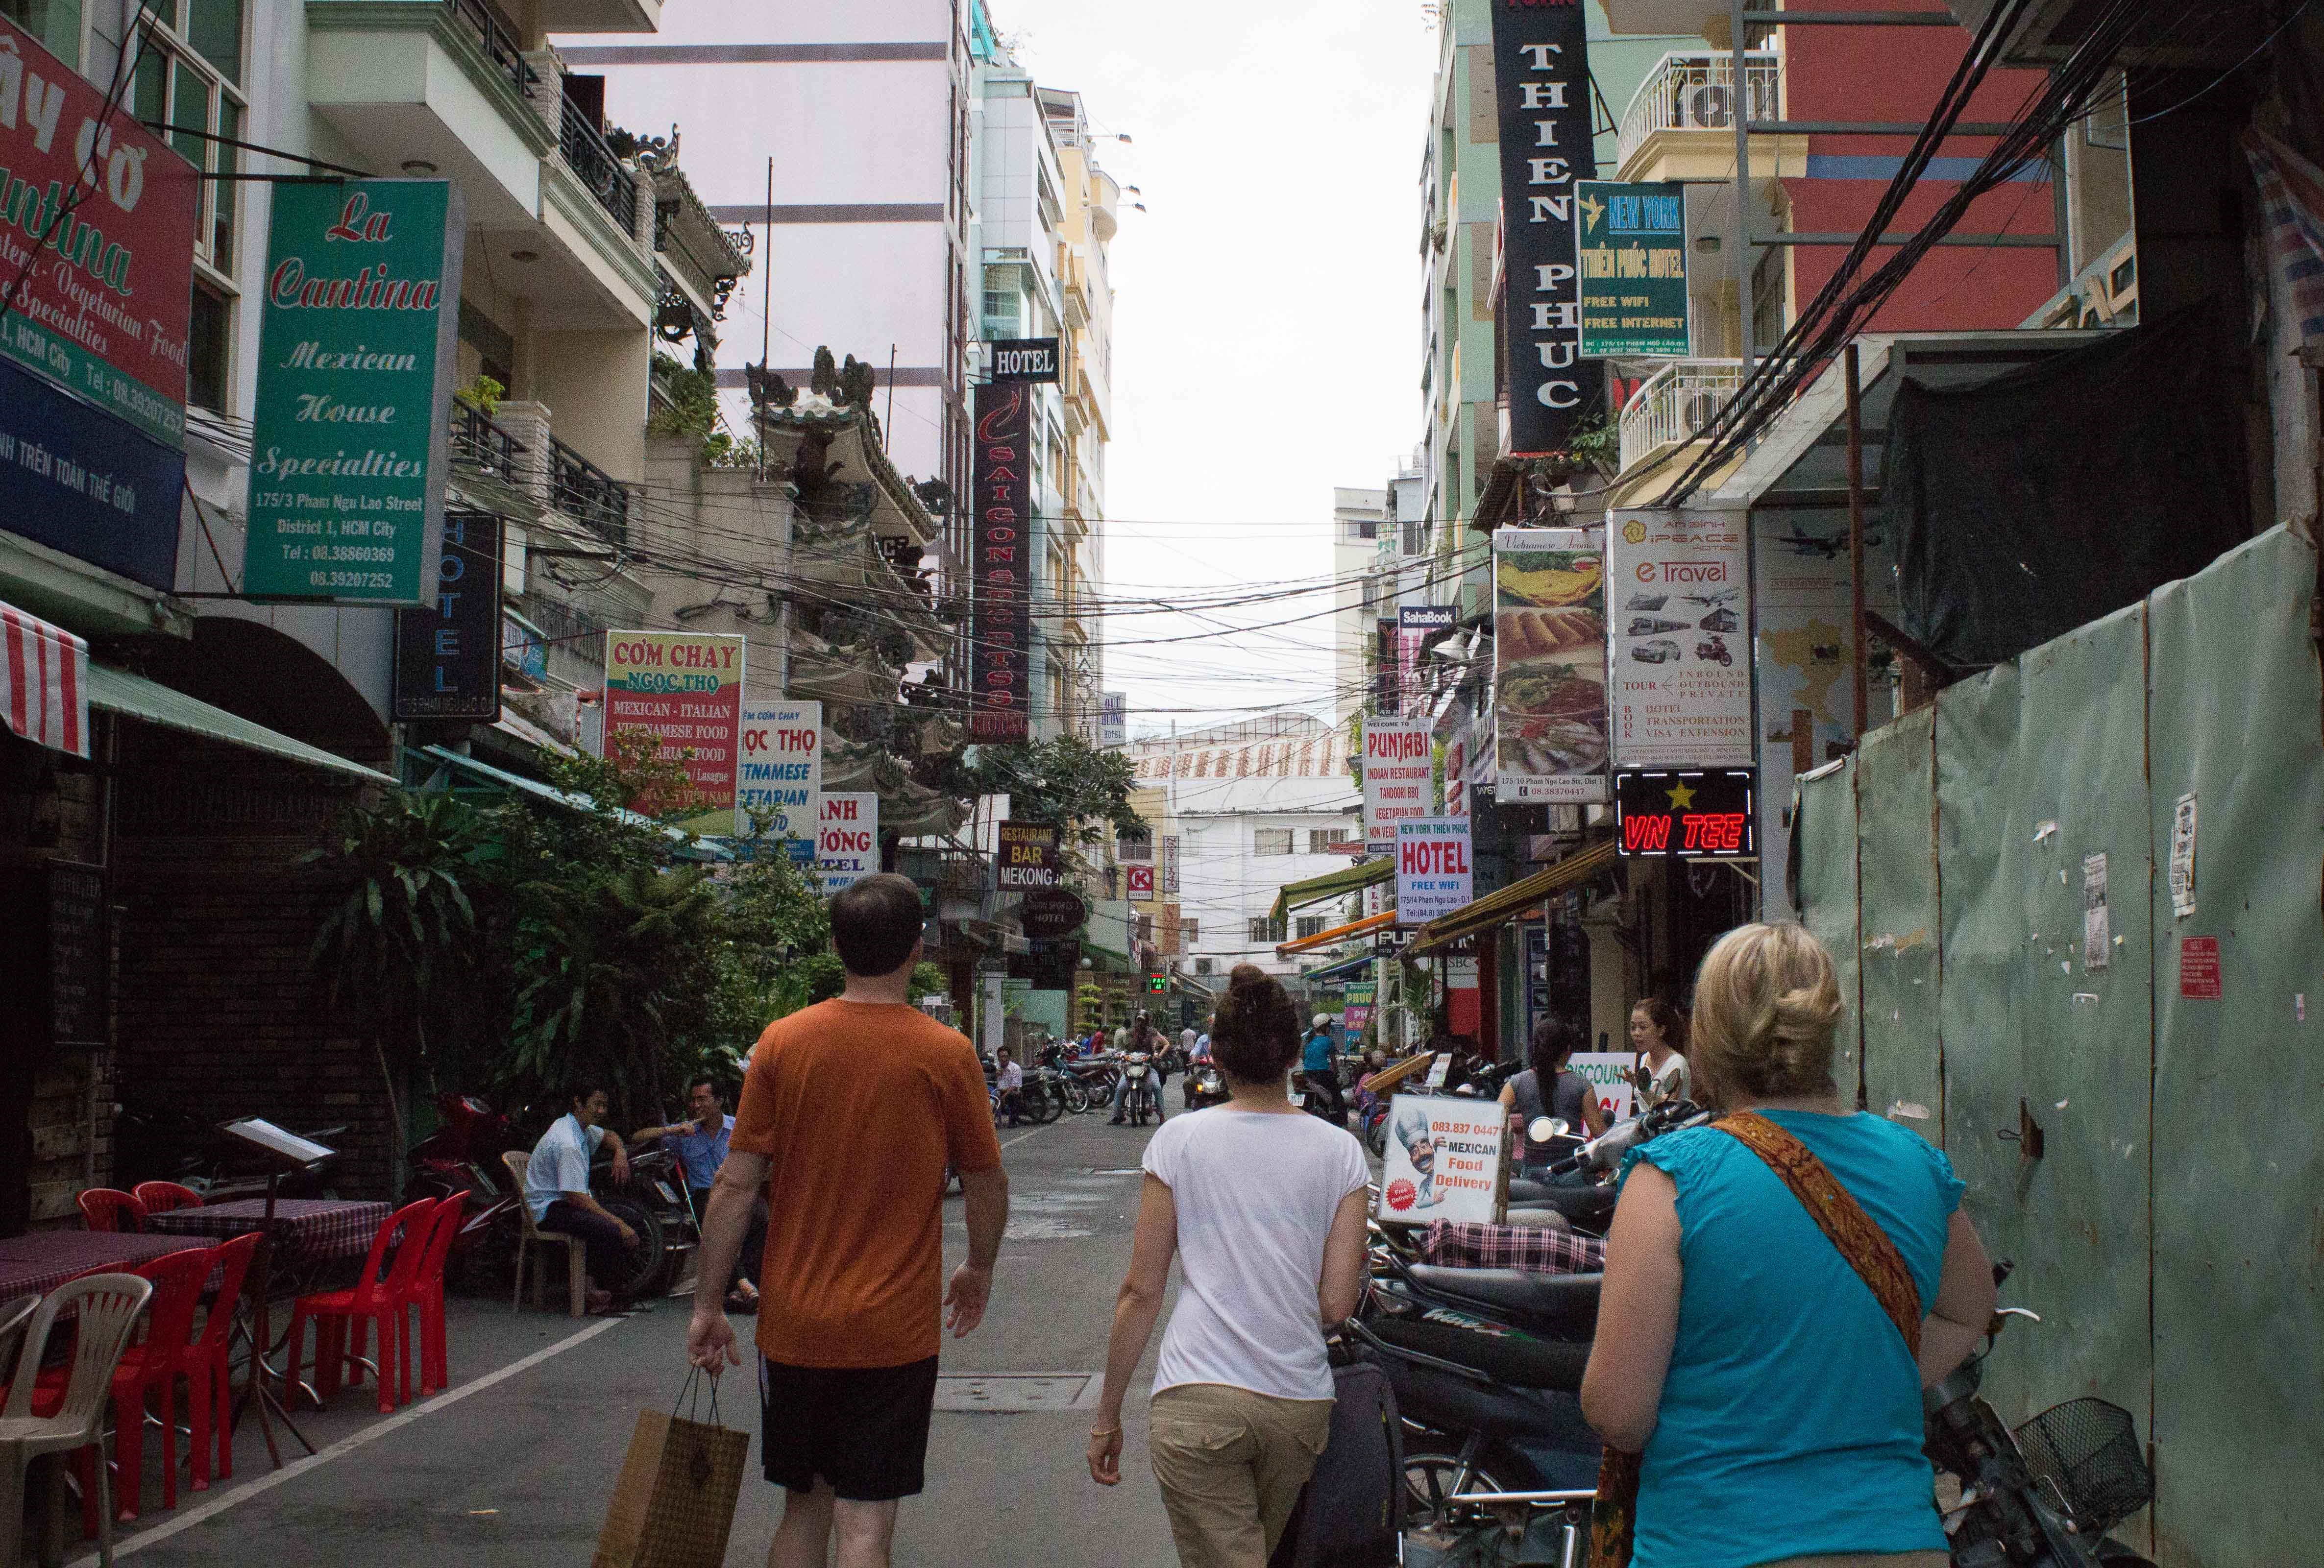 Photos from Saigon Vietnam 2012